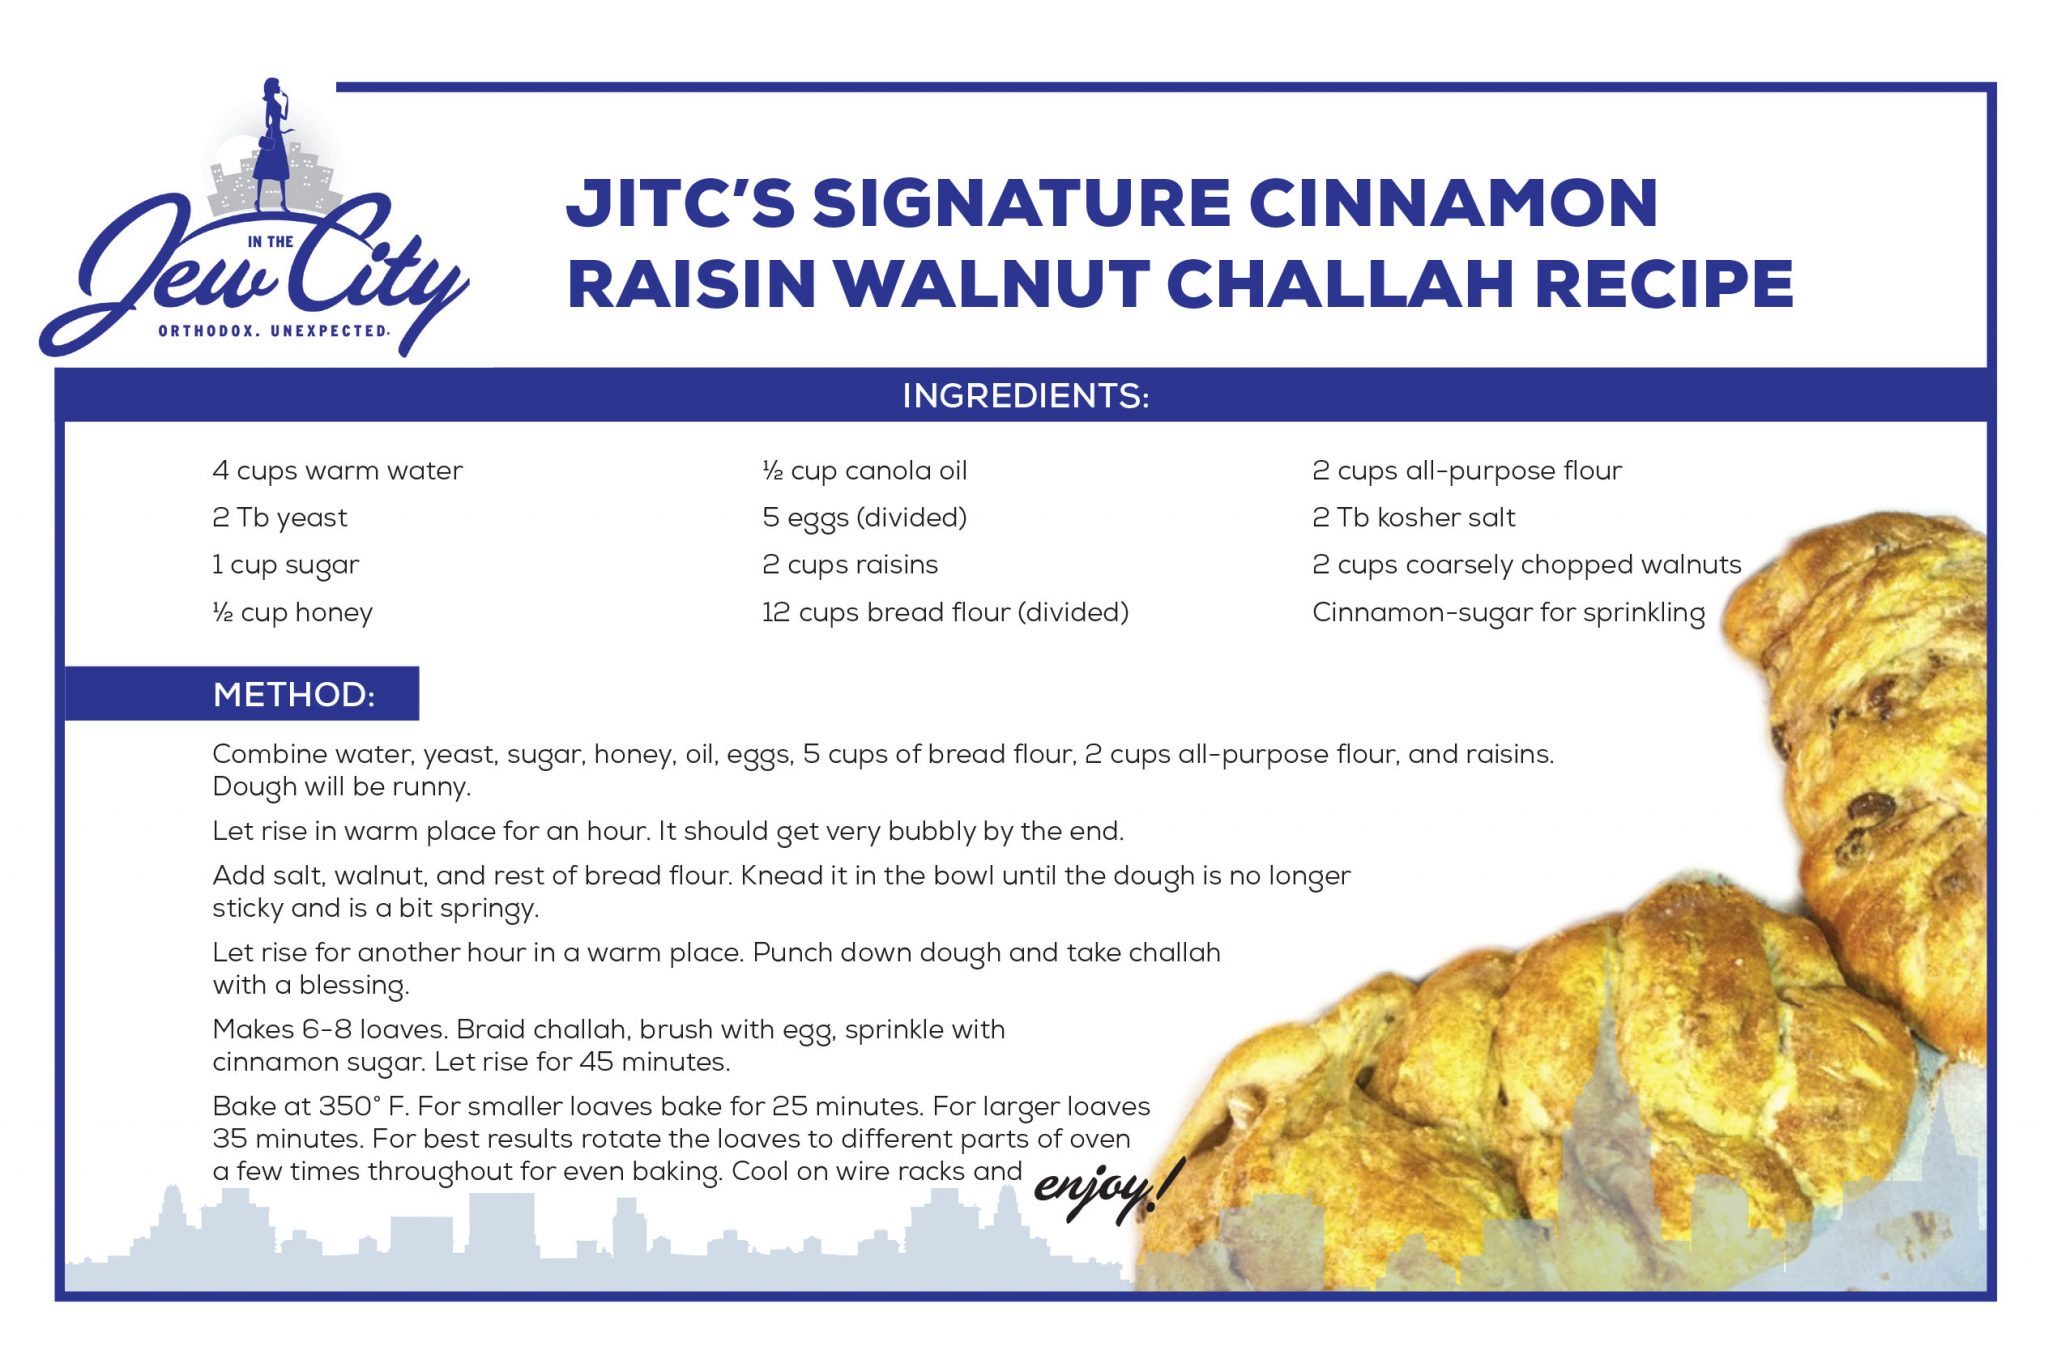 Challah Recipe Image